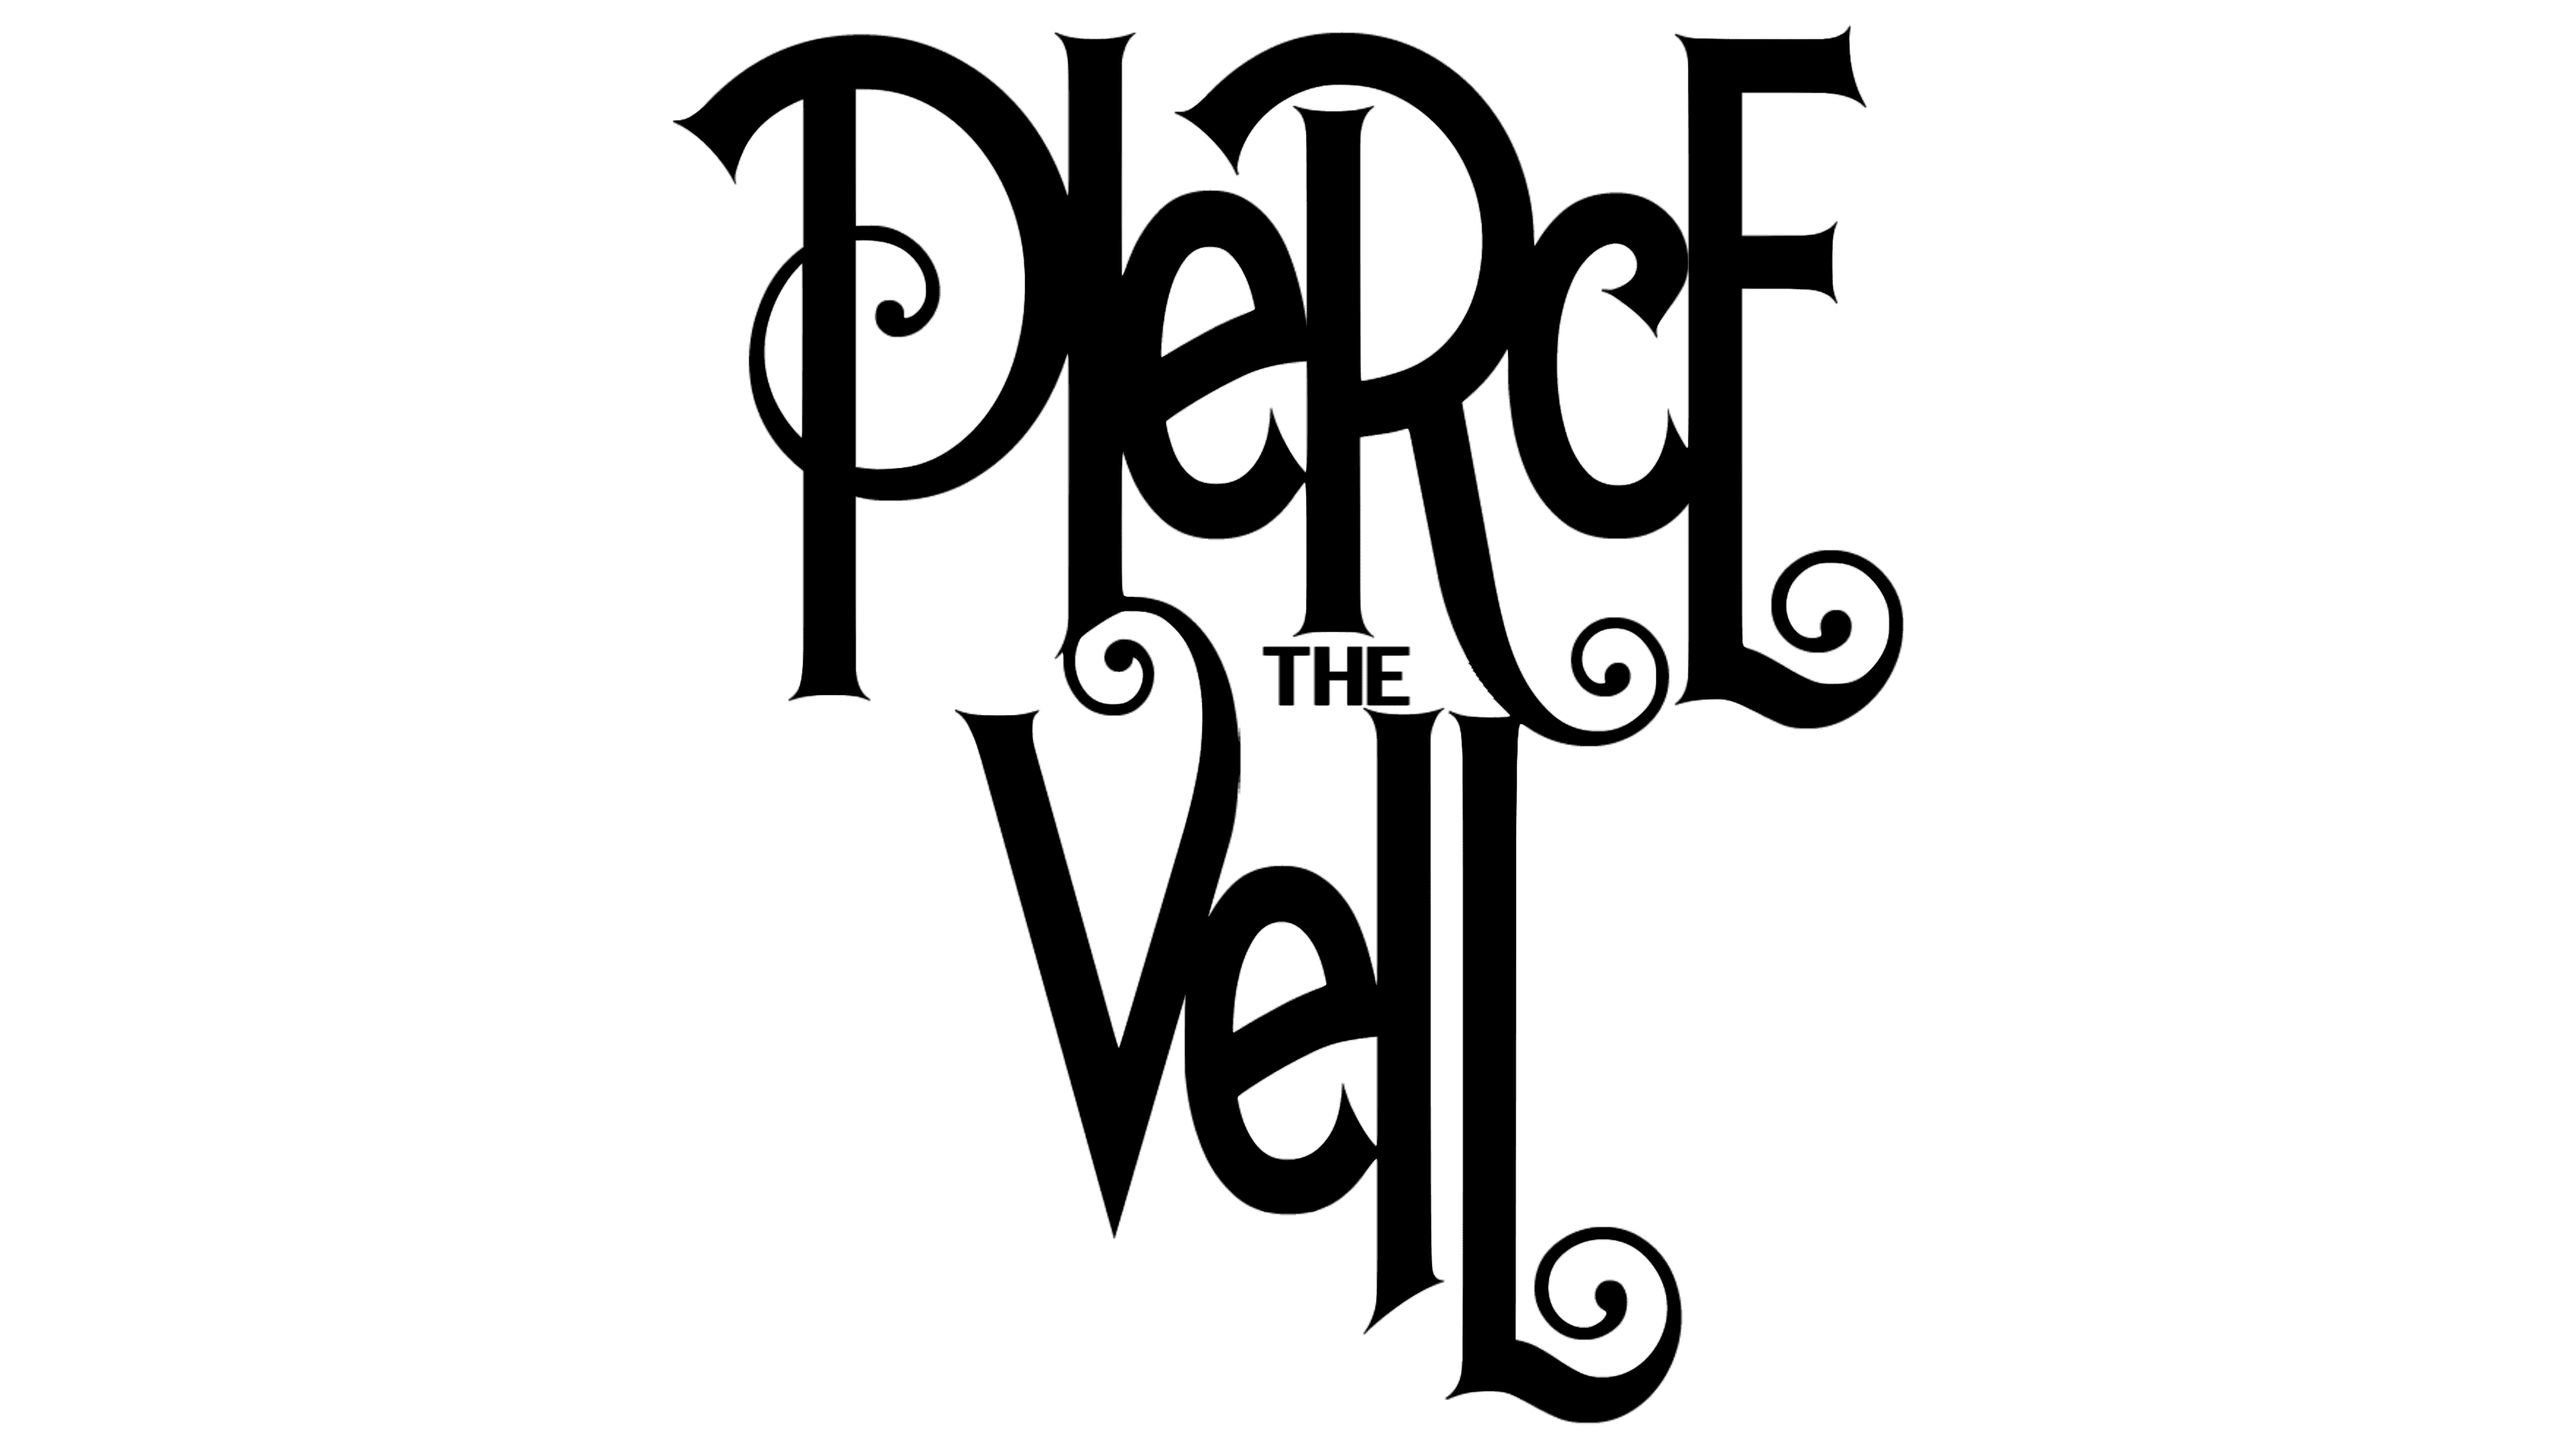 pierce the veil background